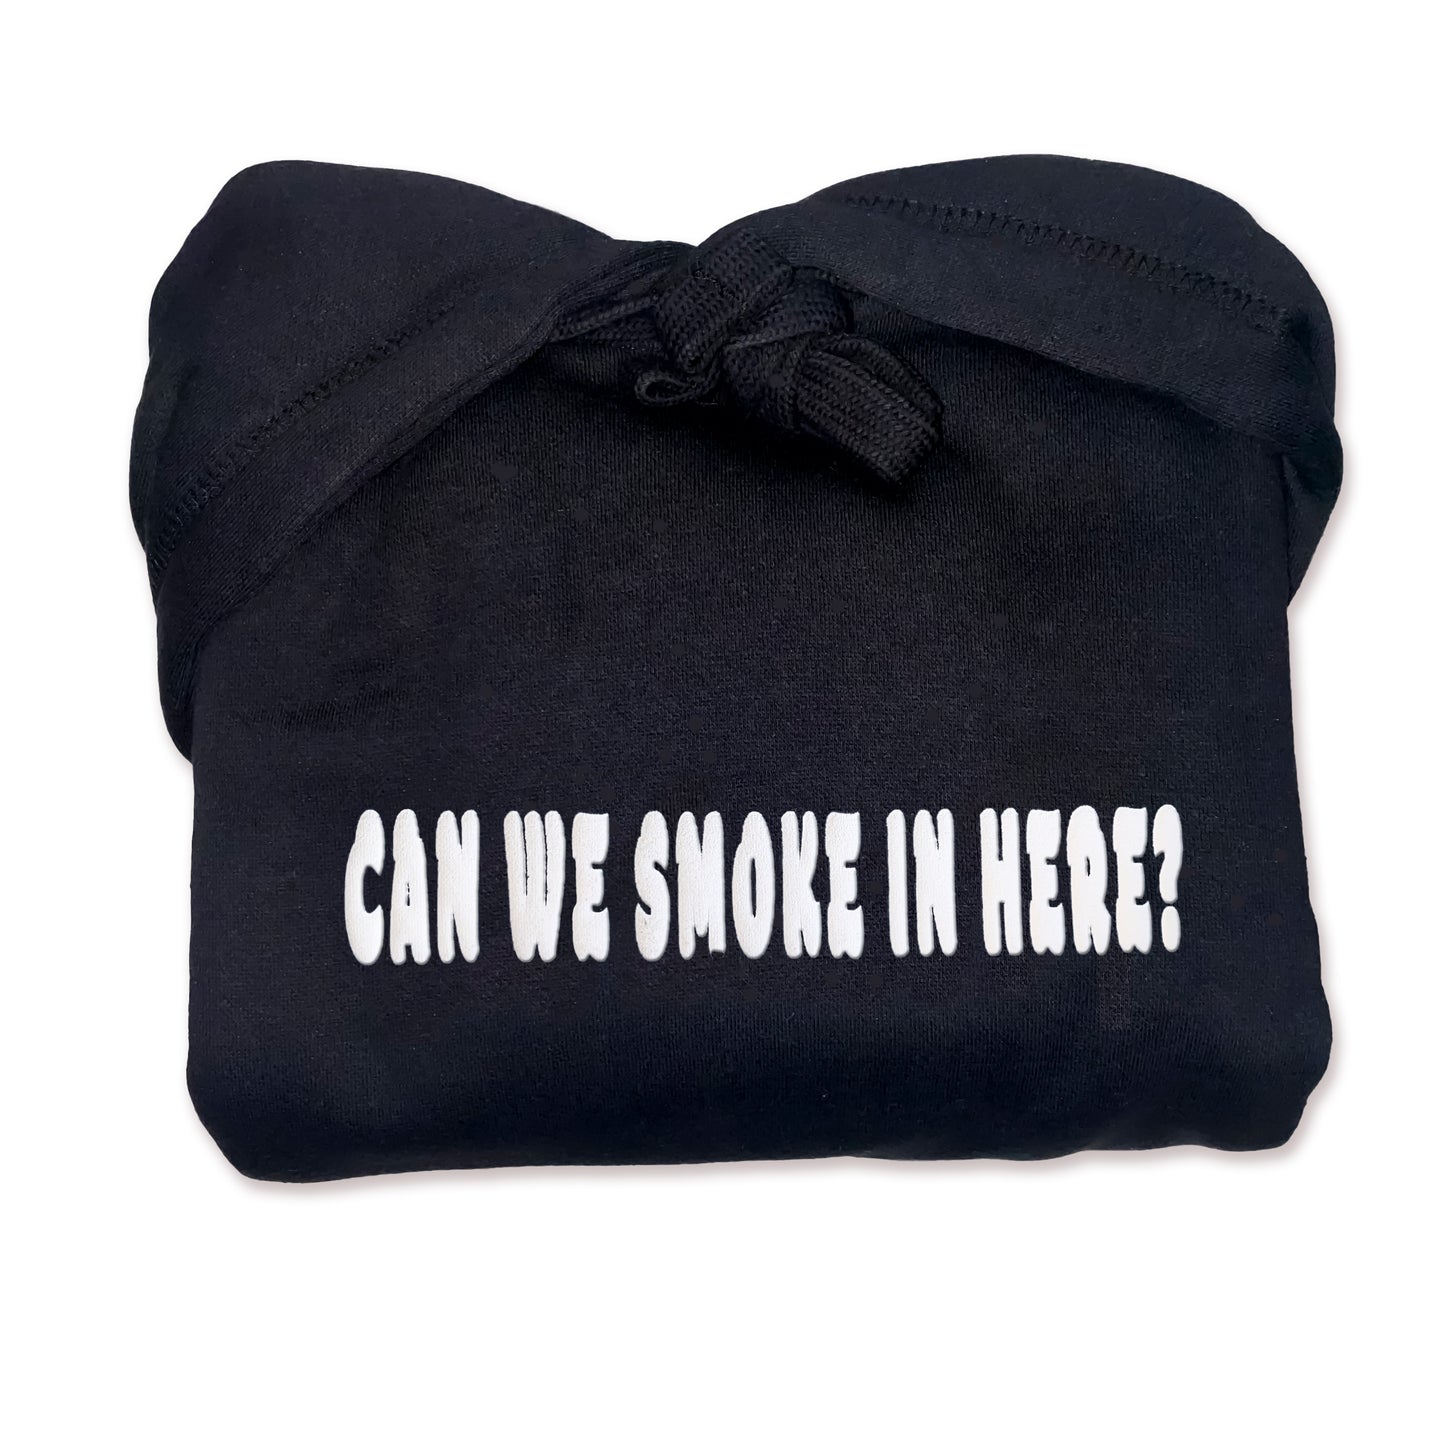 Can We Smoke In Here? Black Hoody